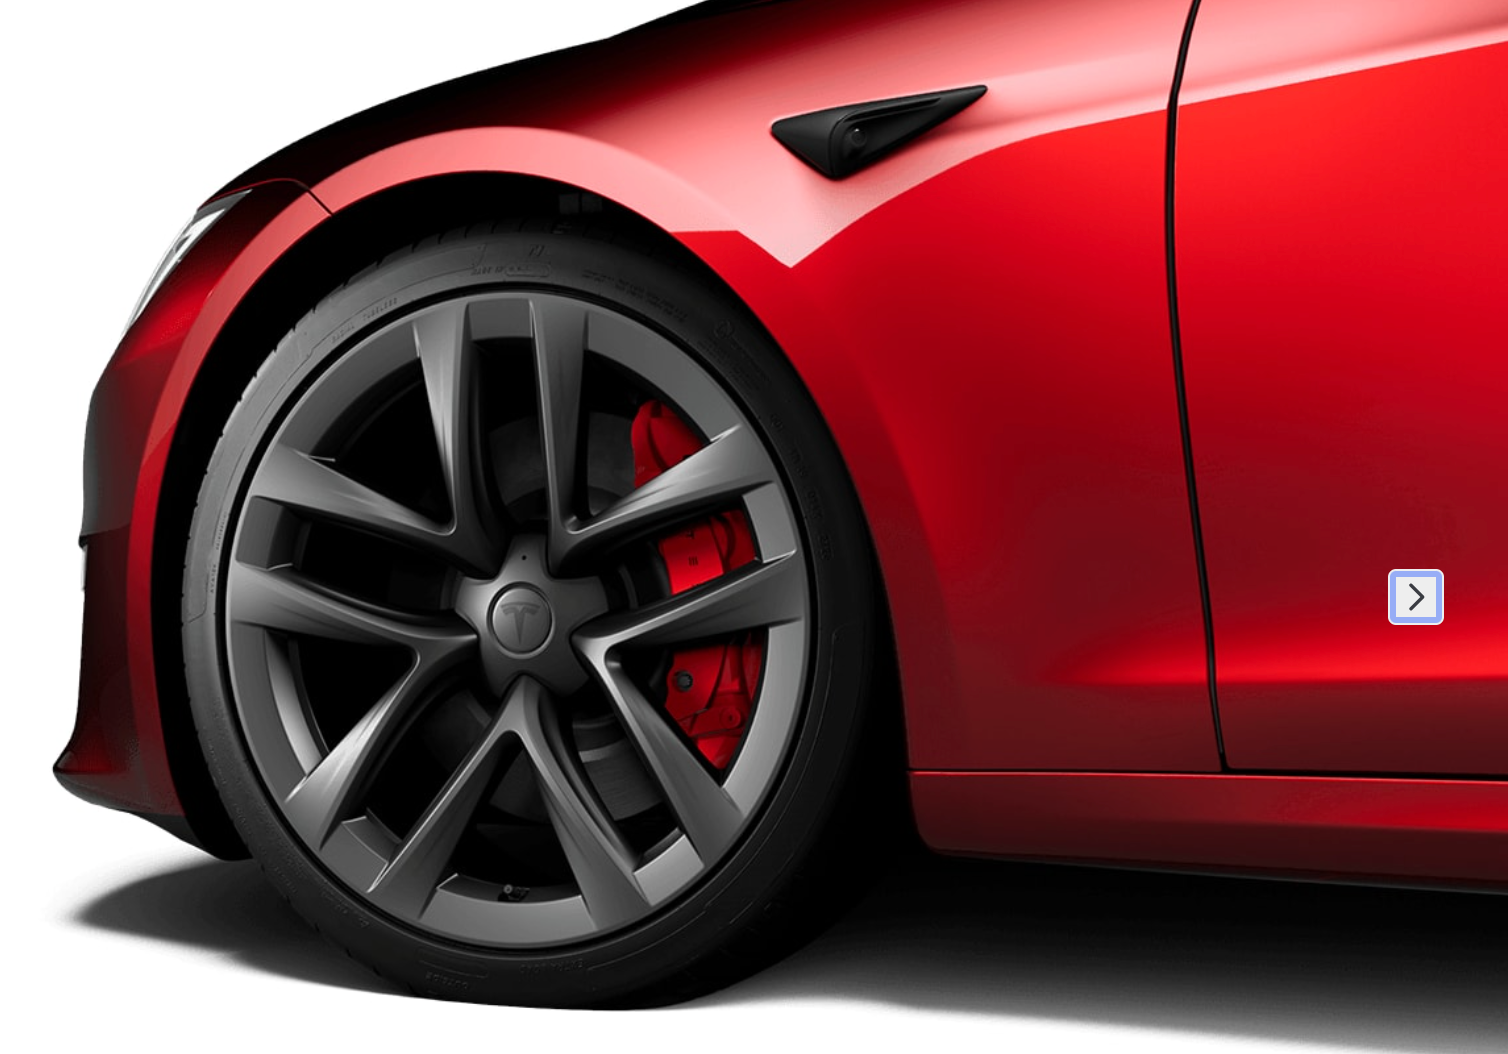 Splendida nuova verniciatura per la Tesla Model S e la Model X.